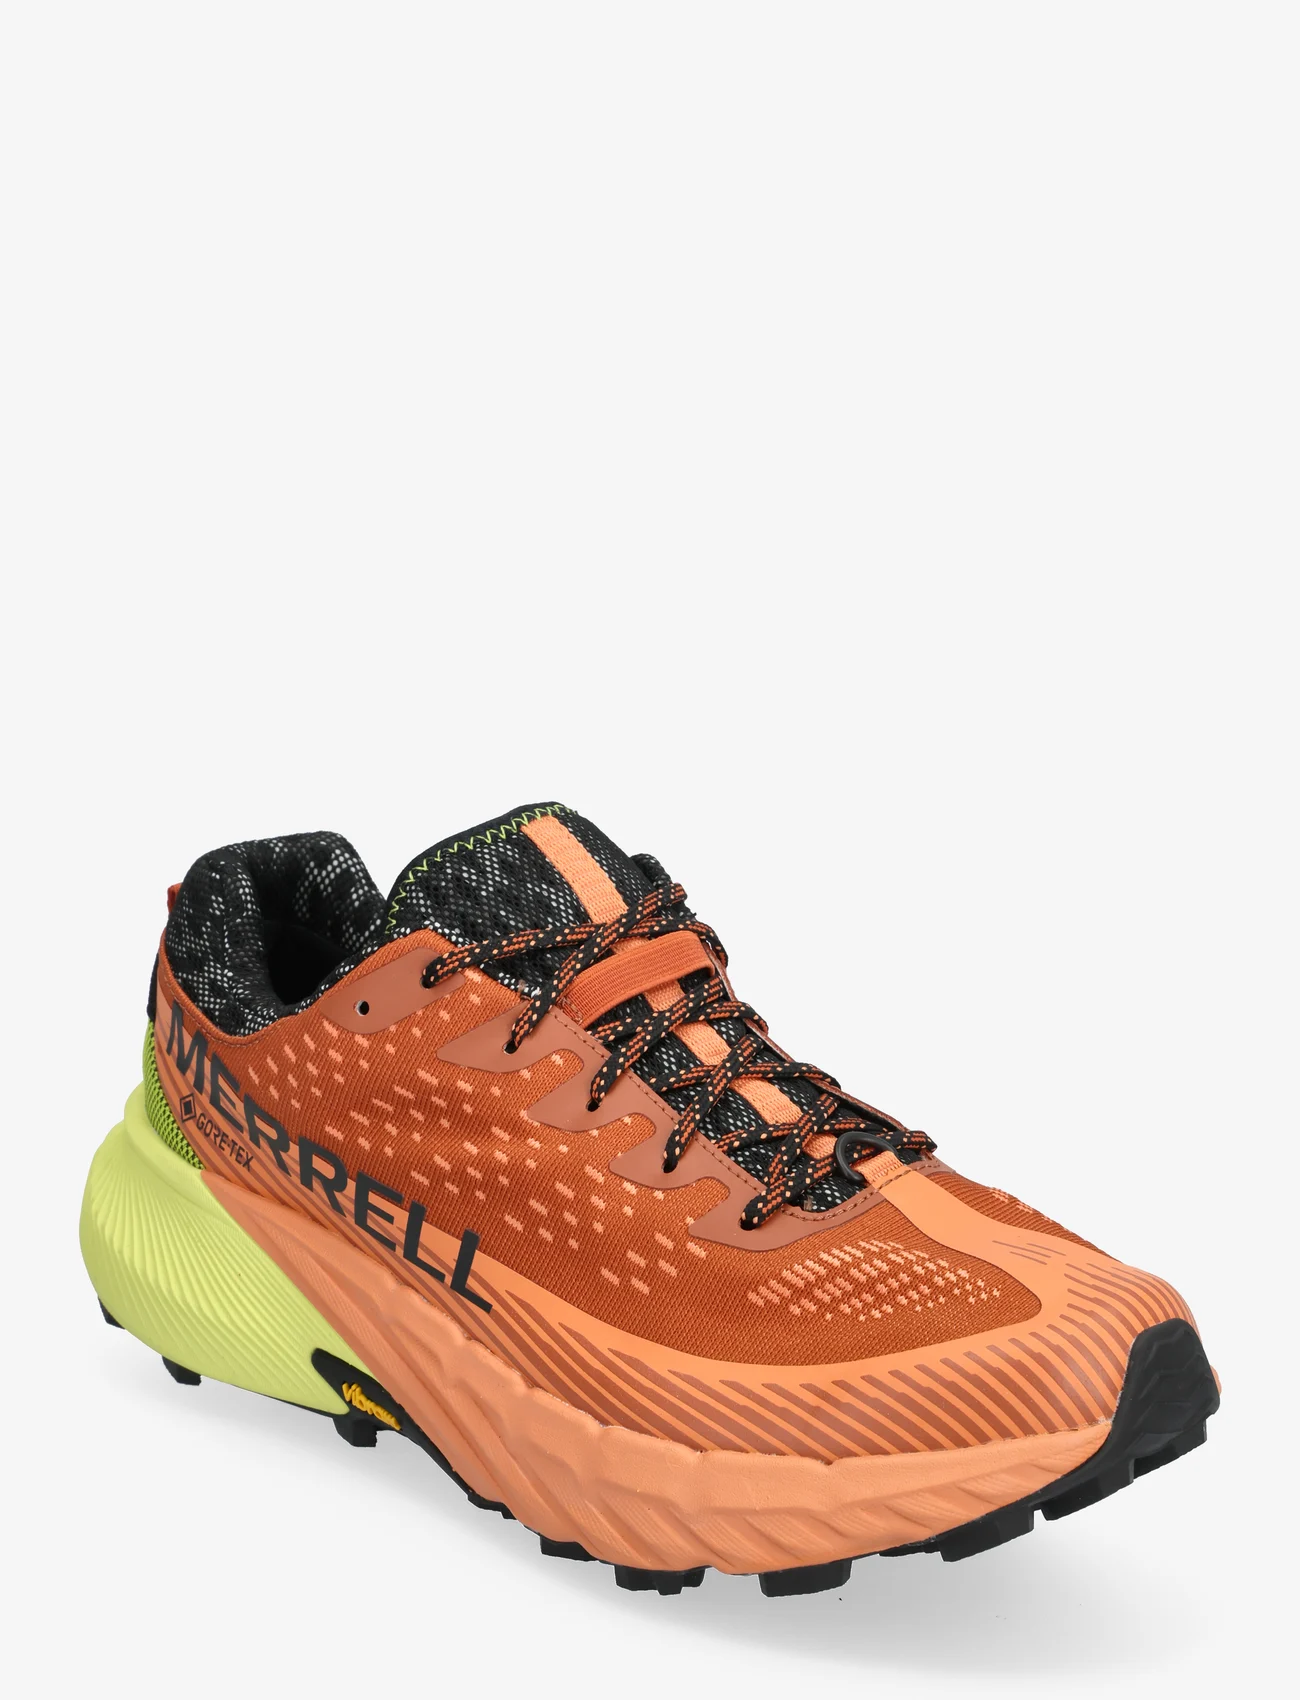 Merrell - Men's Agility Peak 5 GTX - Clay/Mel - running shoes - clay/melon - 0